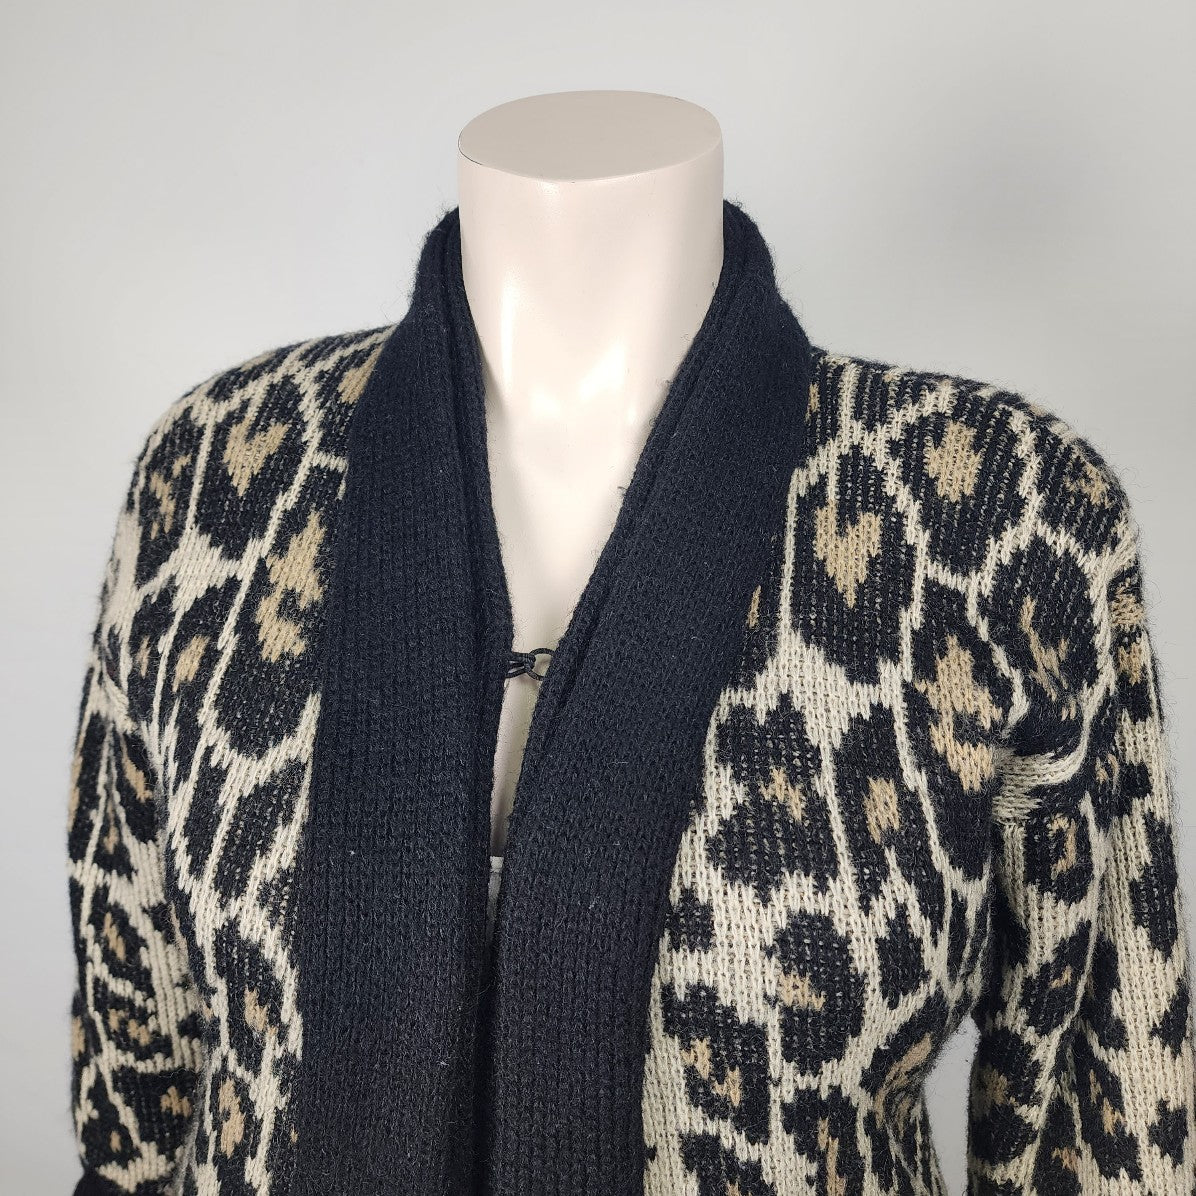 Vintage Knit Animal Print Long Sweater Jacket Size L/XL